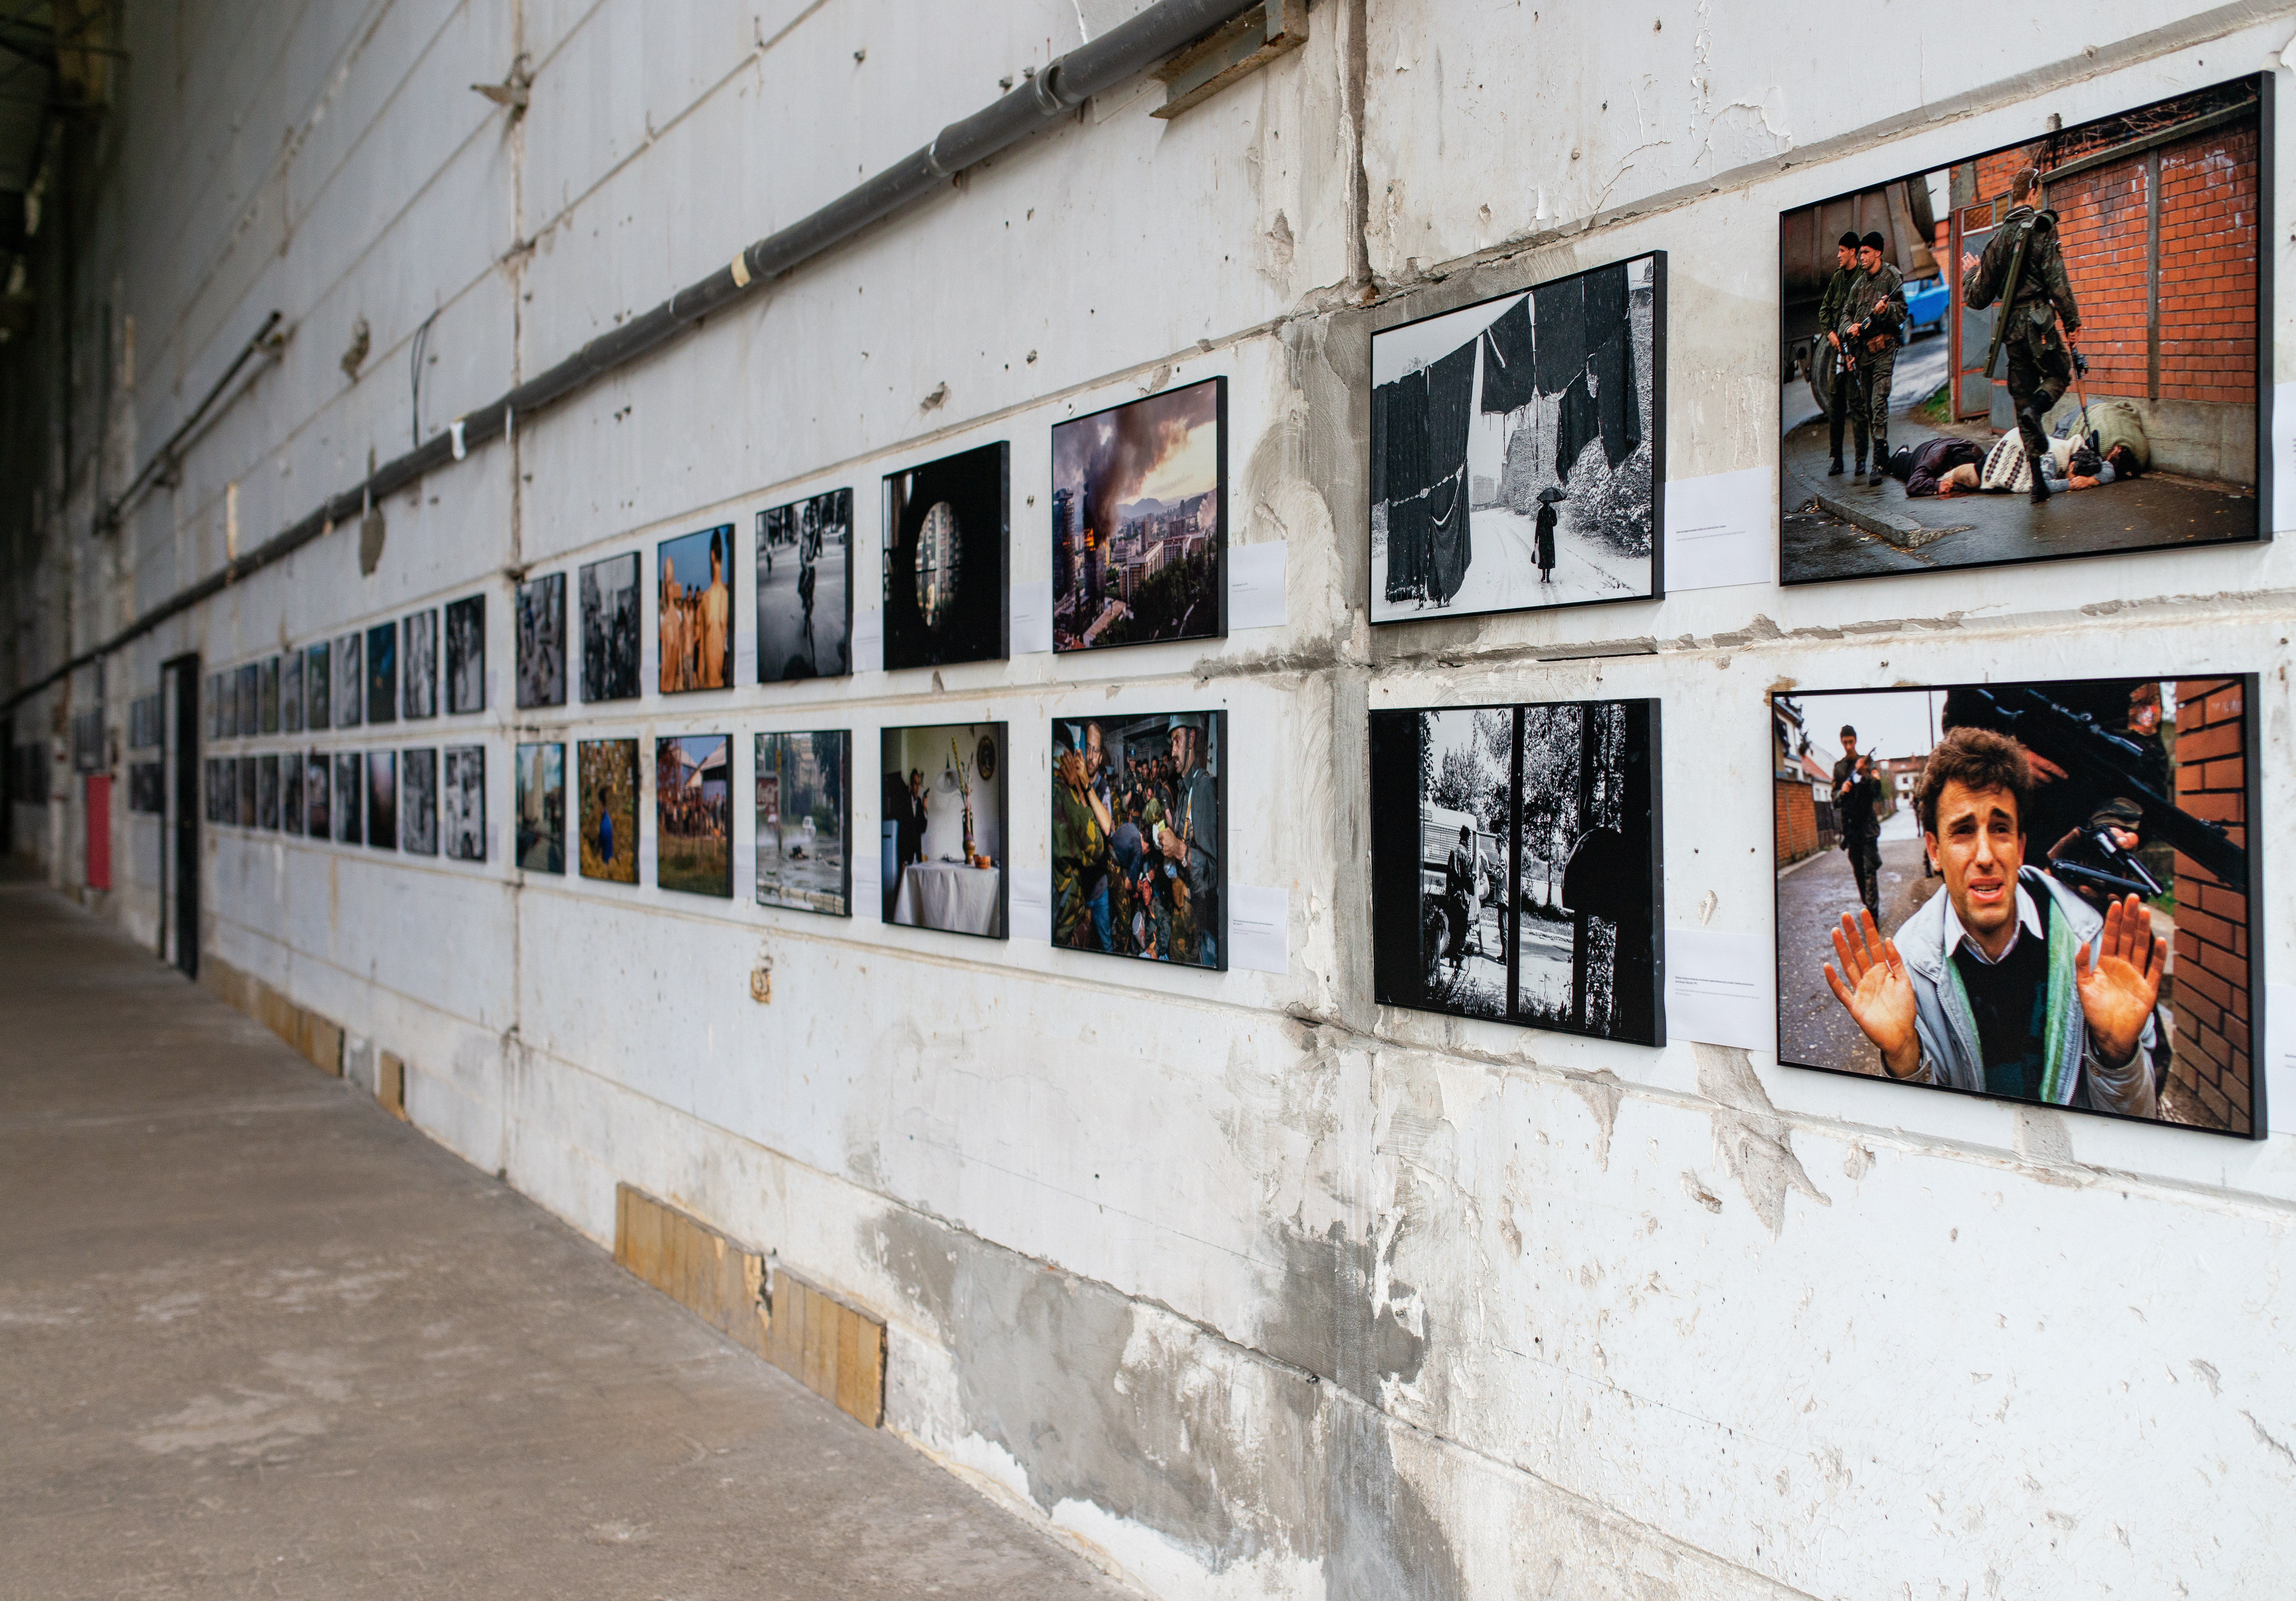 Fotogalerie in der ehemaligen Fabrikhalle in Srebrenica